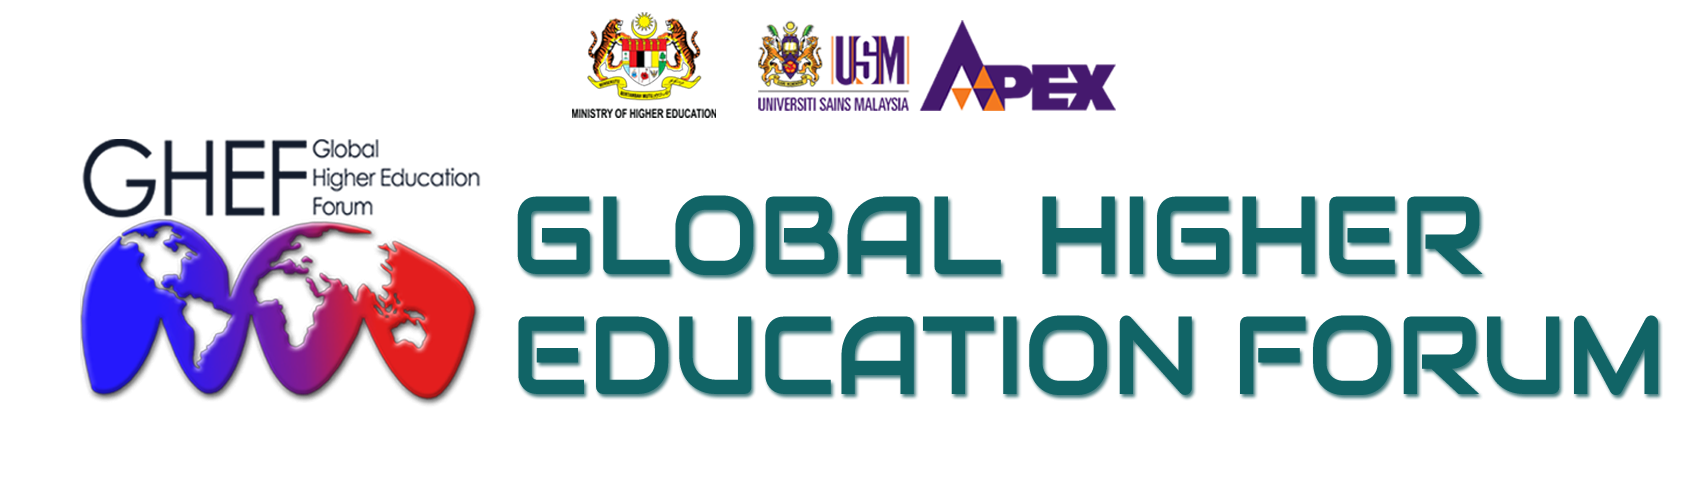 Global Higher Education Forum